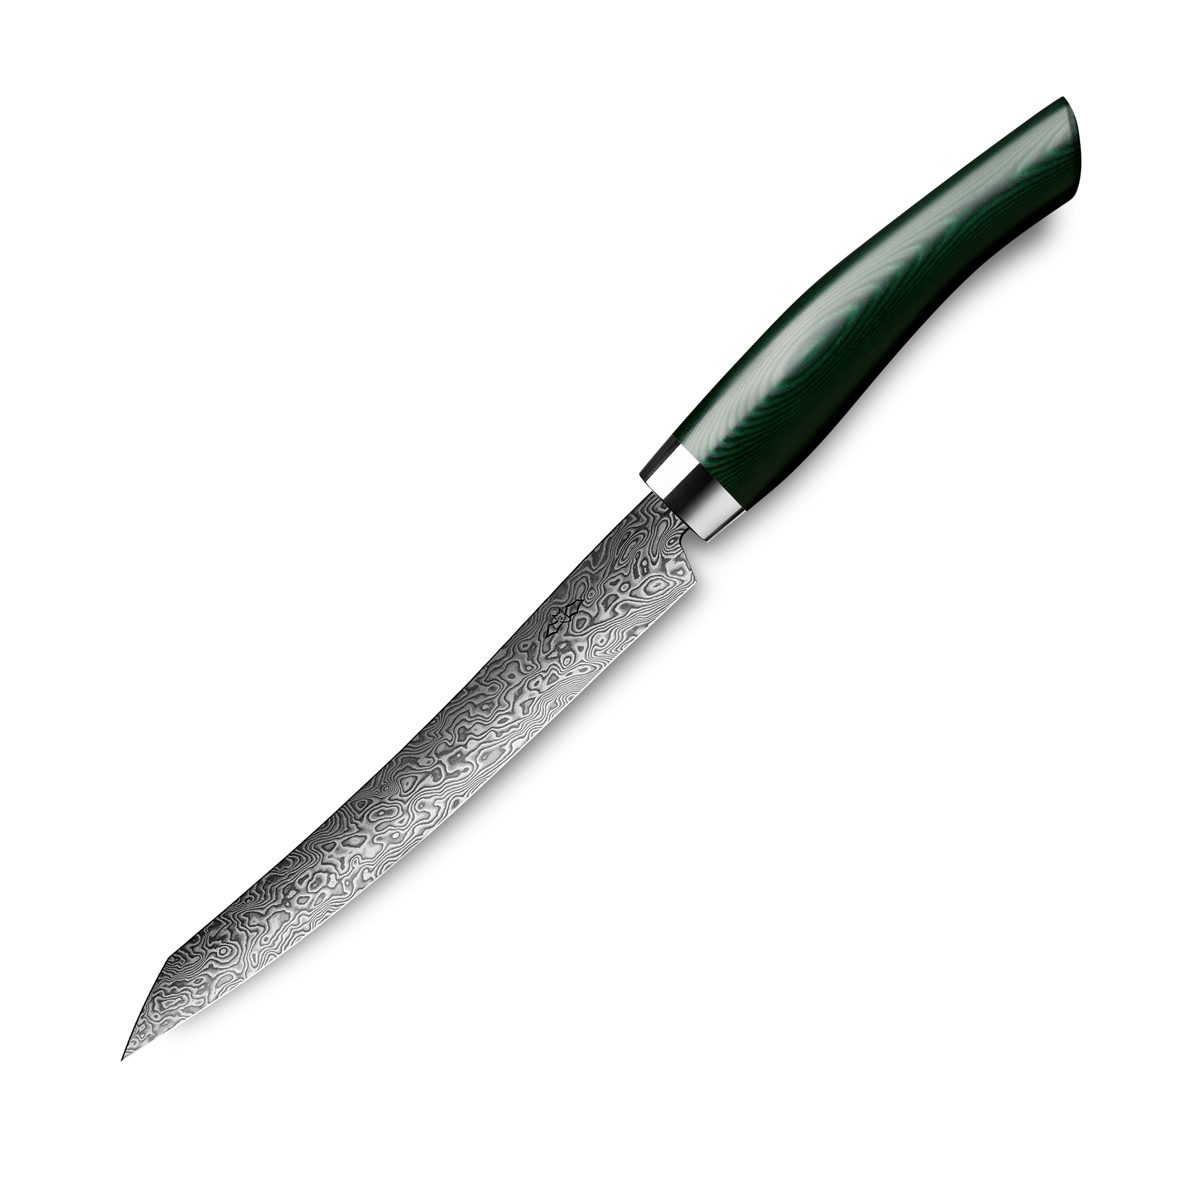 Nesmuk Exklusiv C90 Damast Slicer 16 cm / Griff aus grünem Micarta